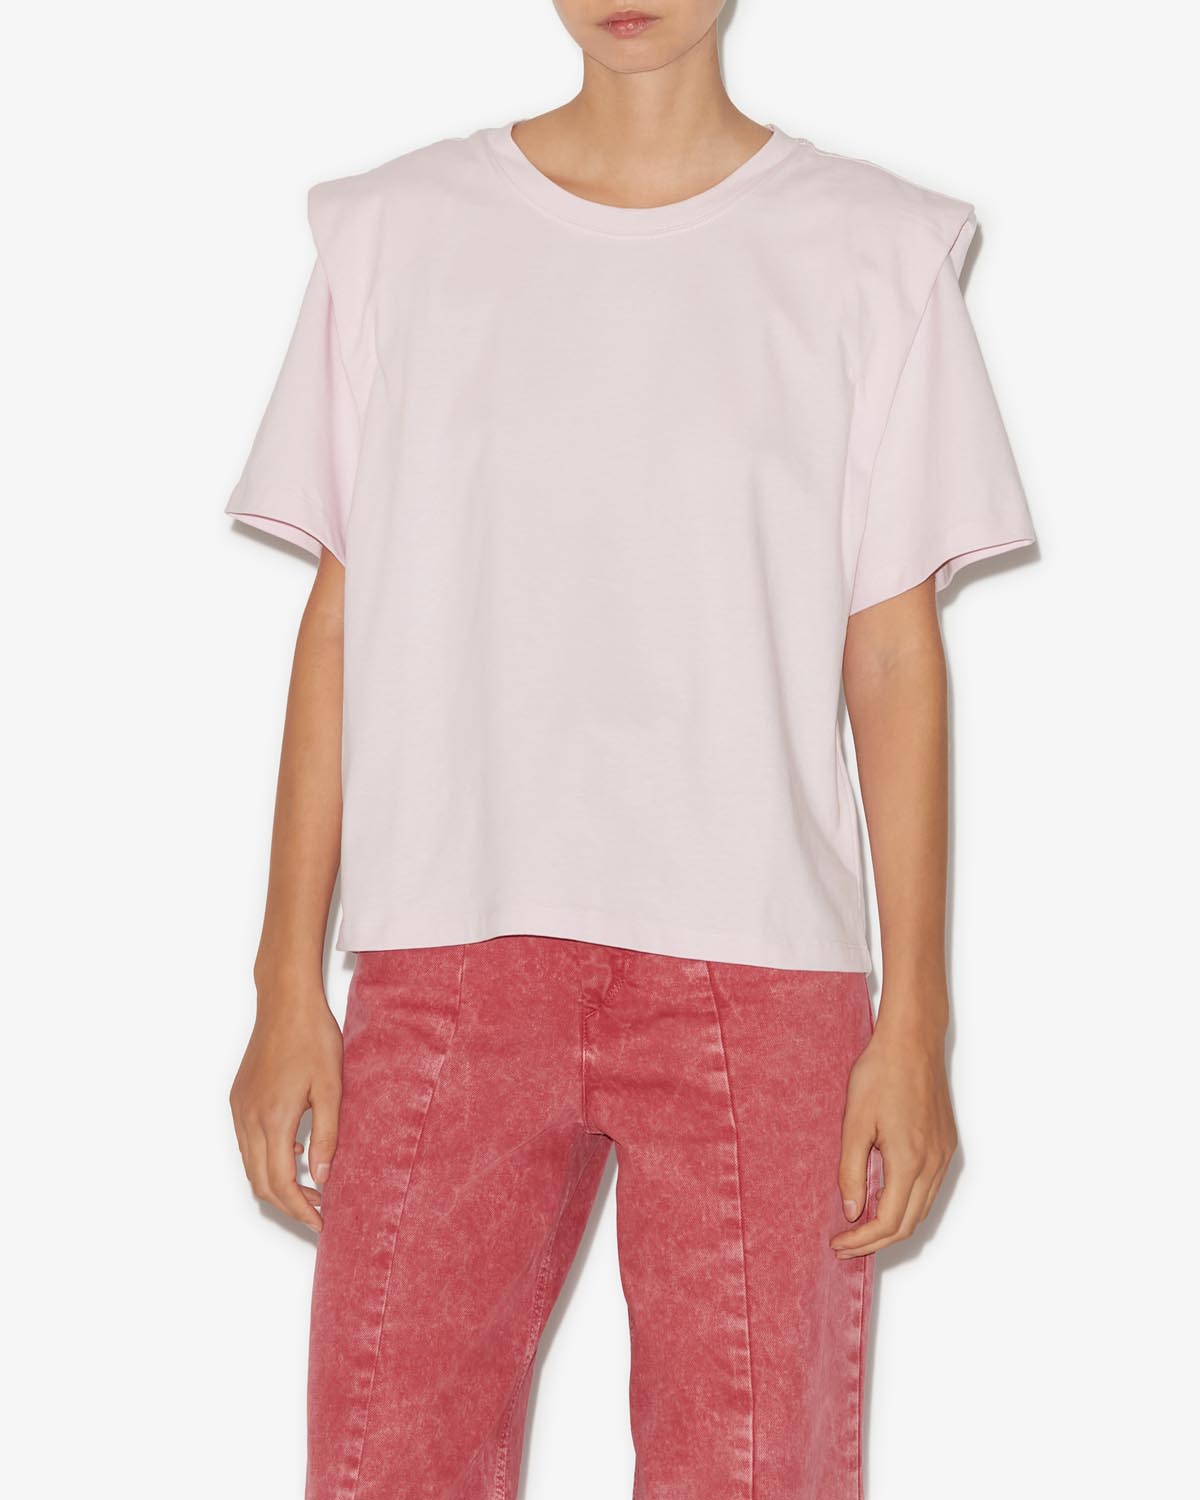 Zelitos ティーシャツ Woman Light pink 11